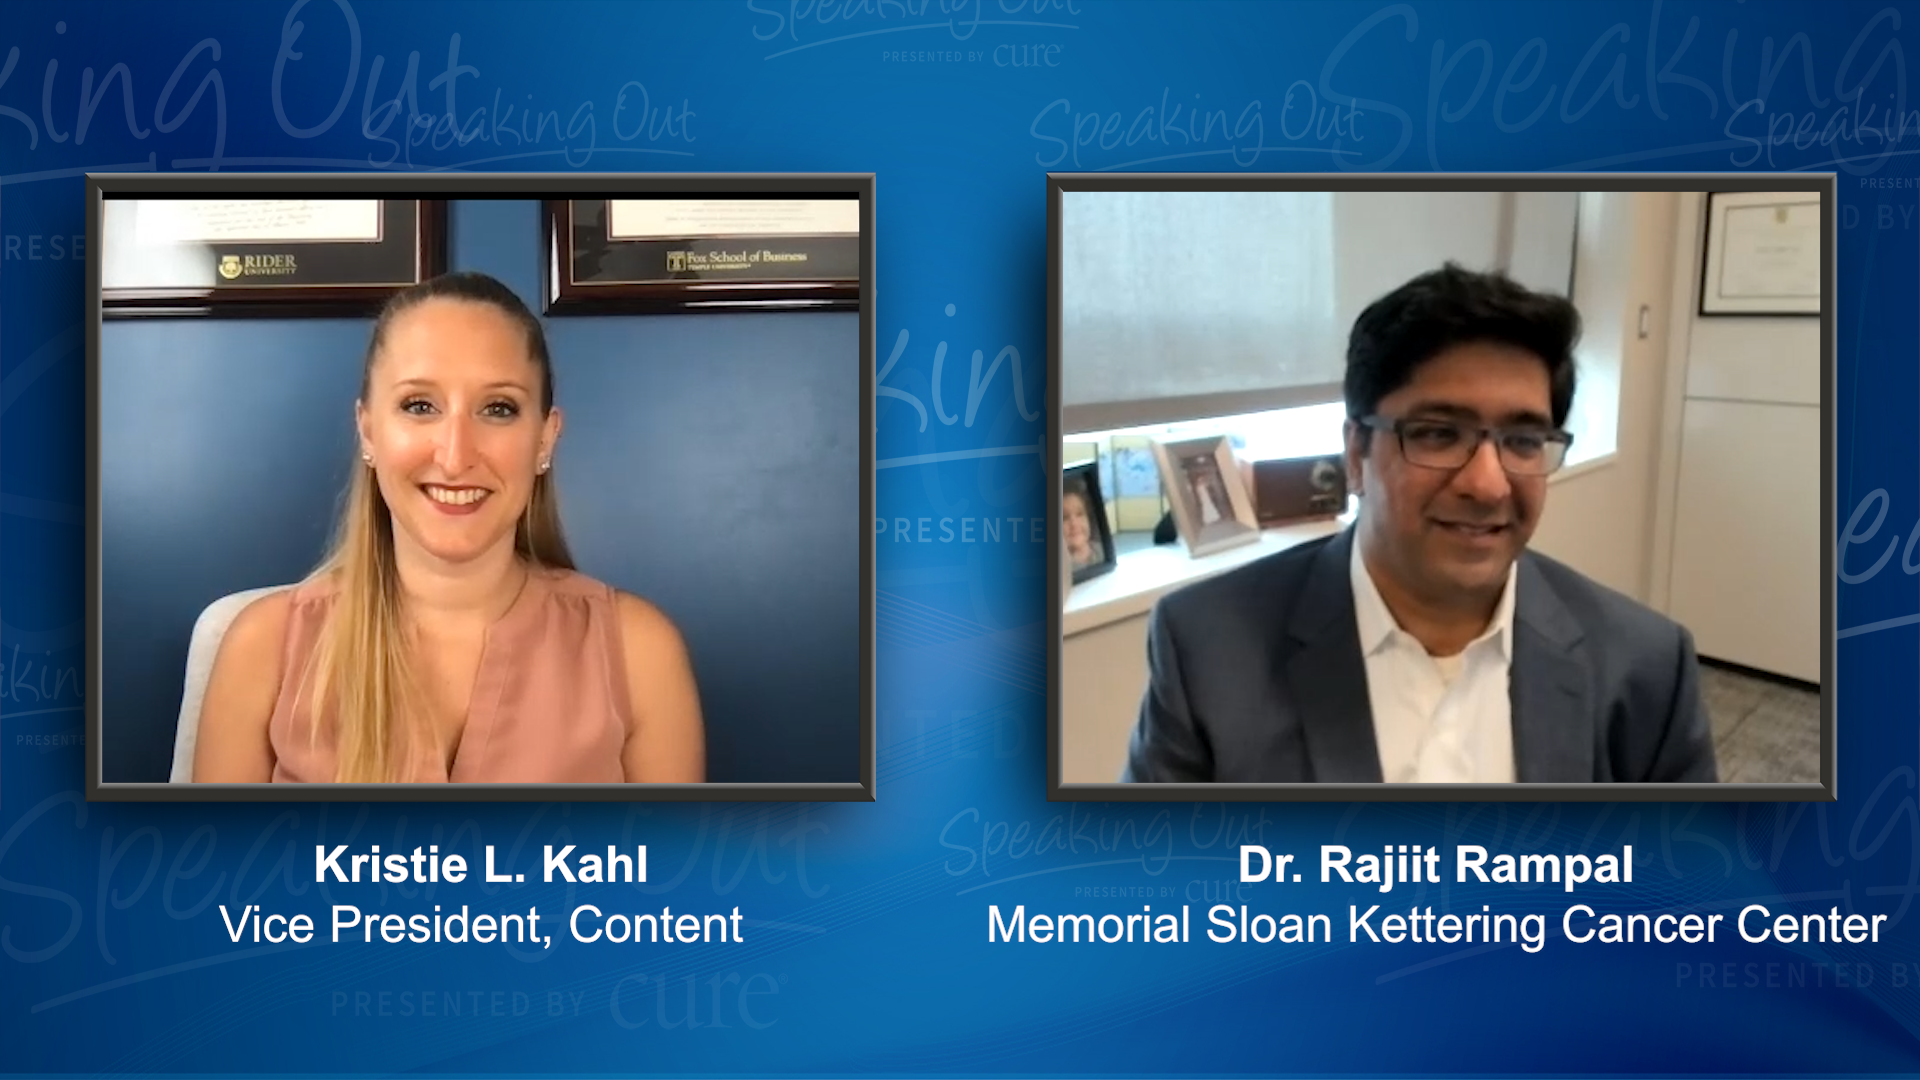 Kristie L. Kahl and Dr. Rajiit Rampal